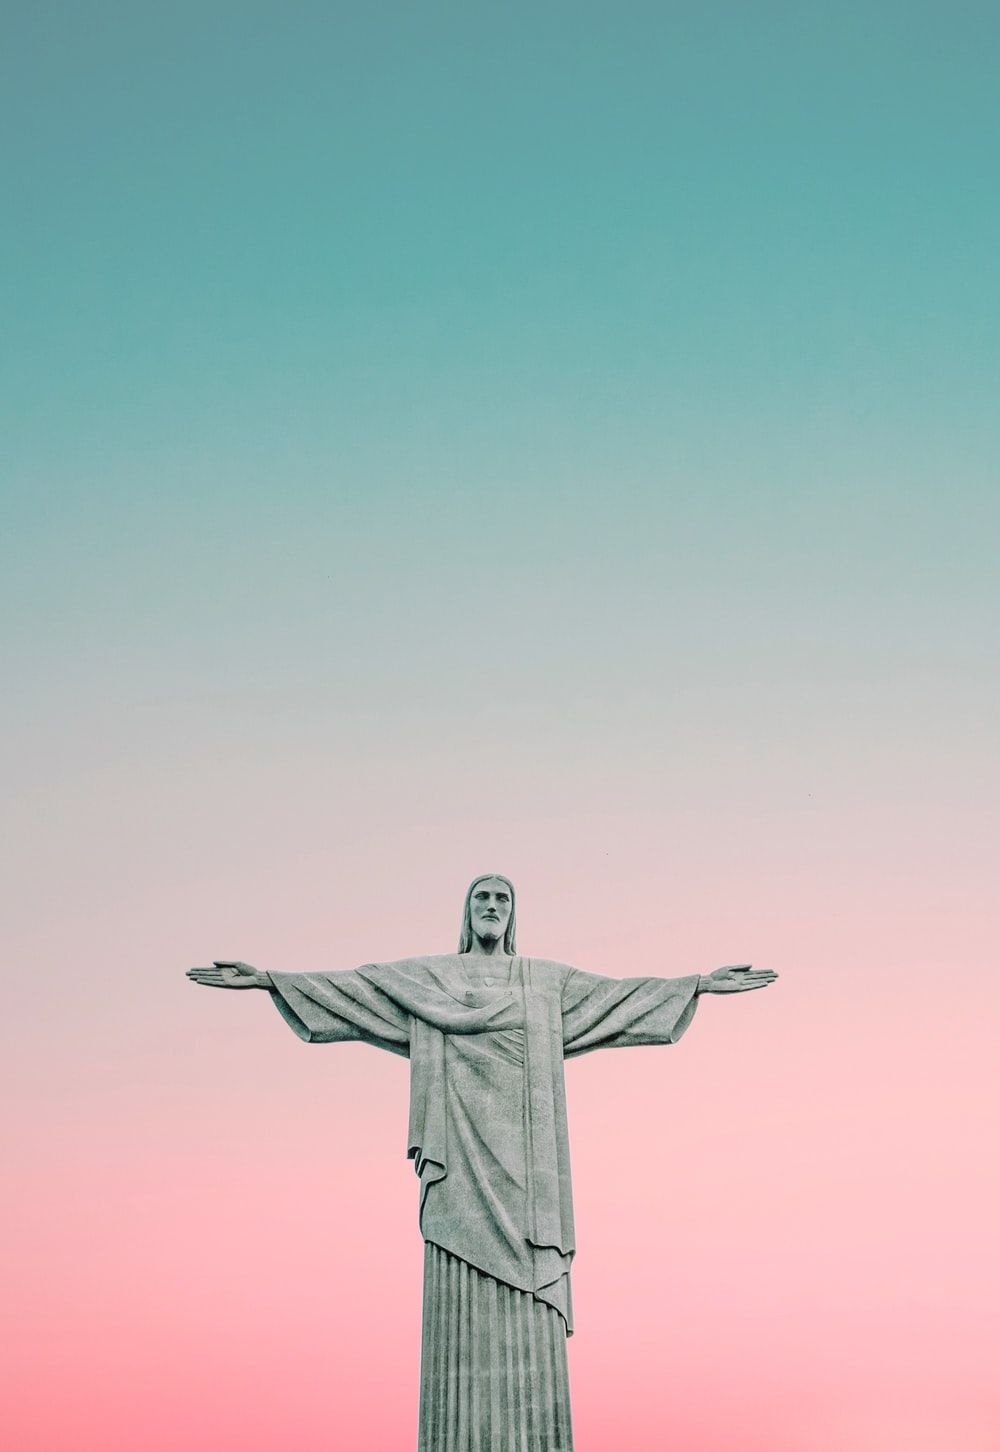 Rio De Janeiro Picture [HD]. Download Free Image